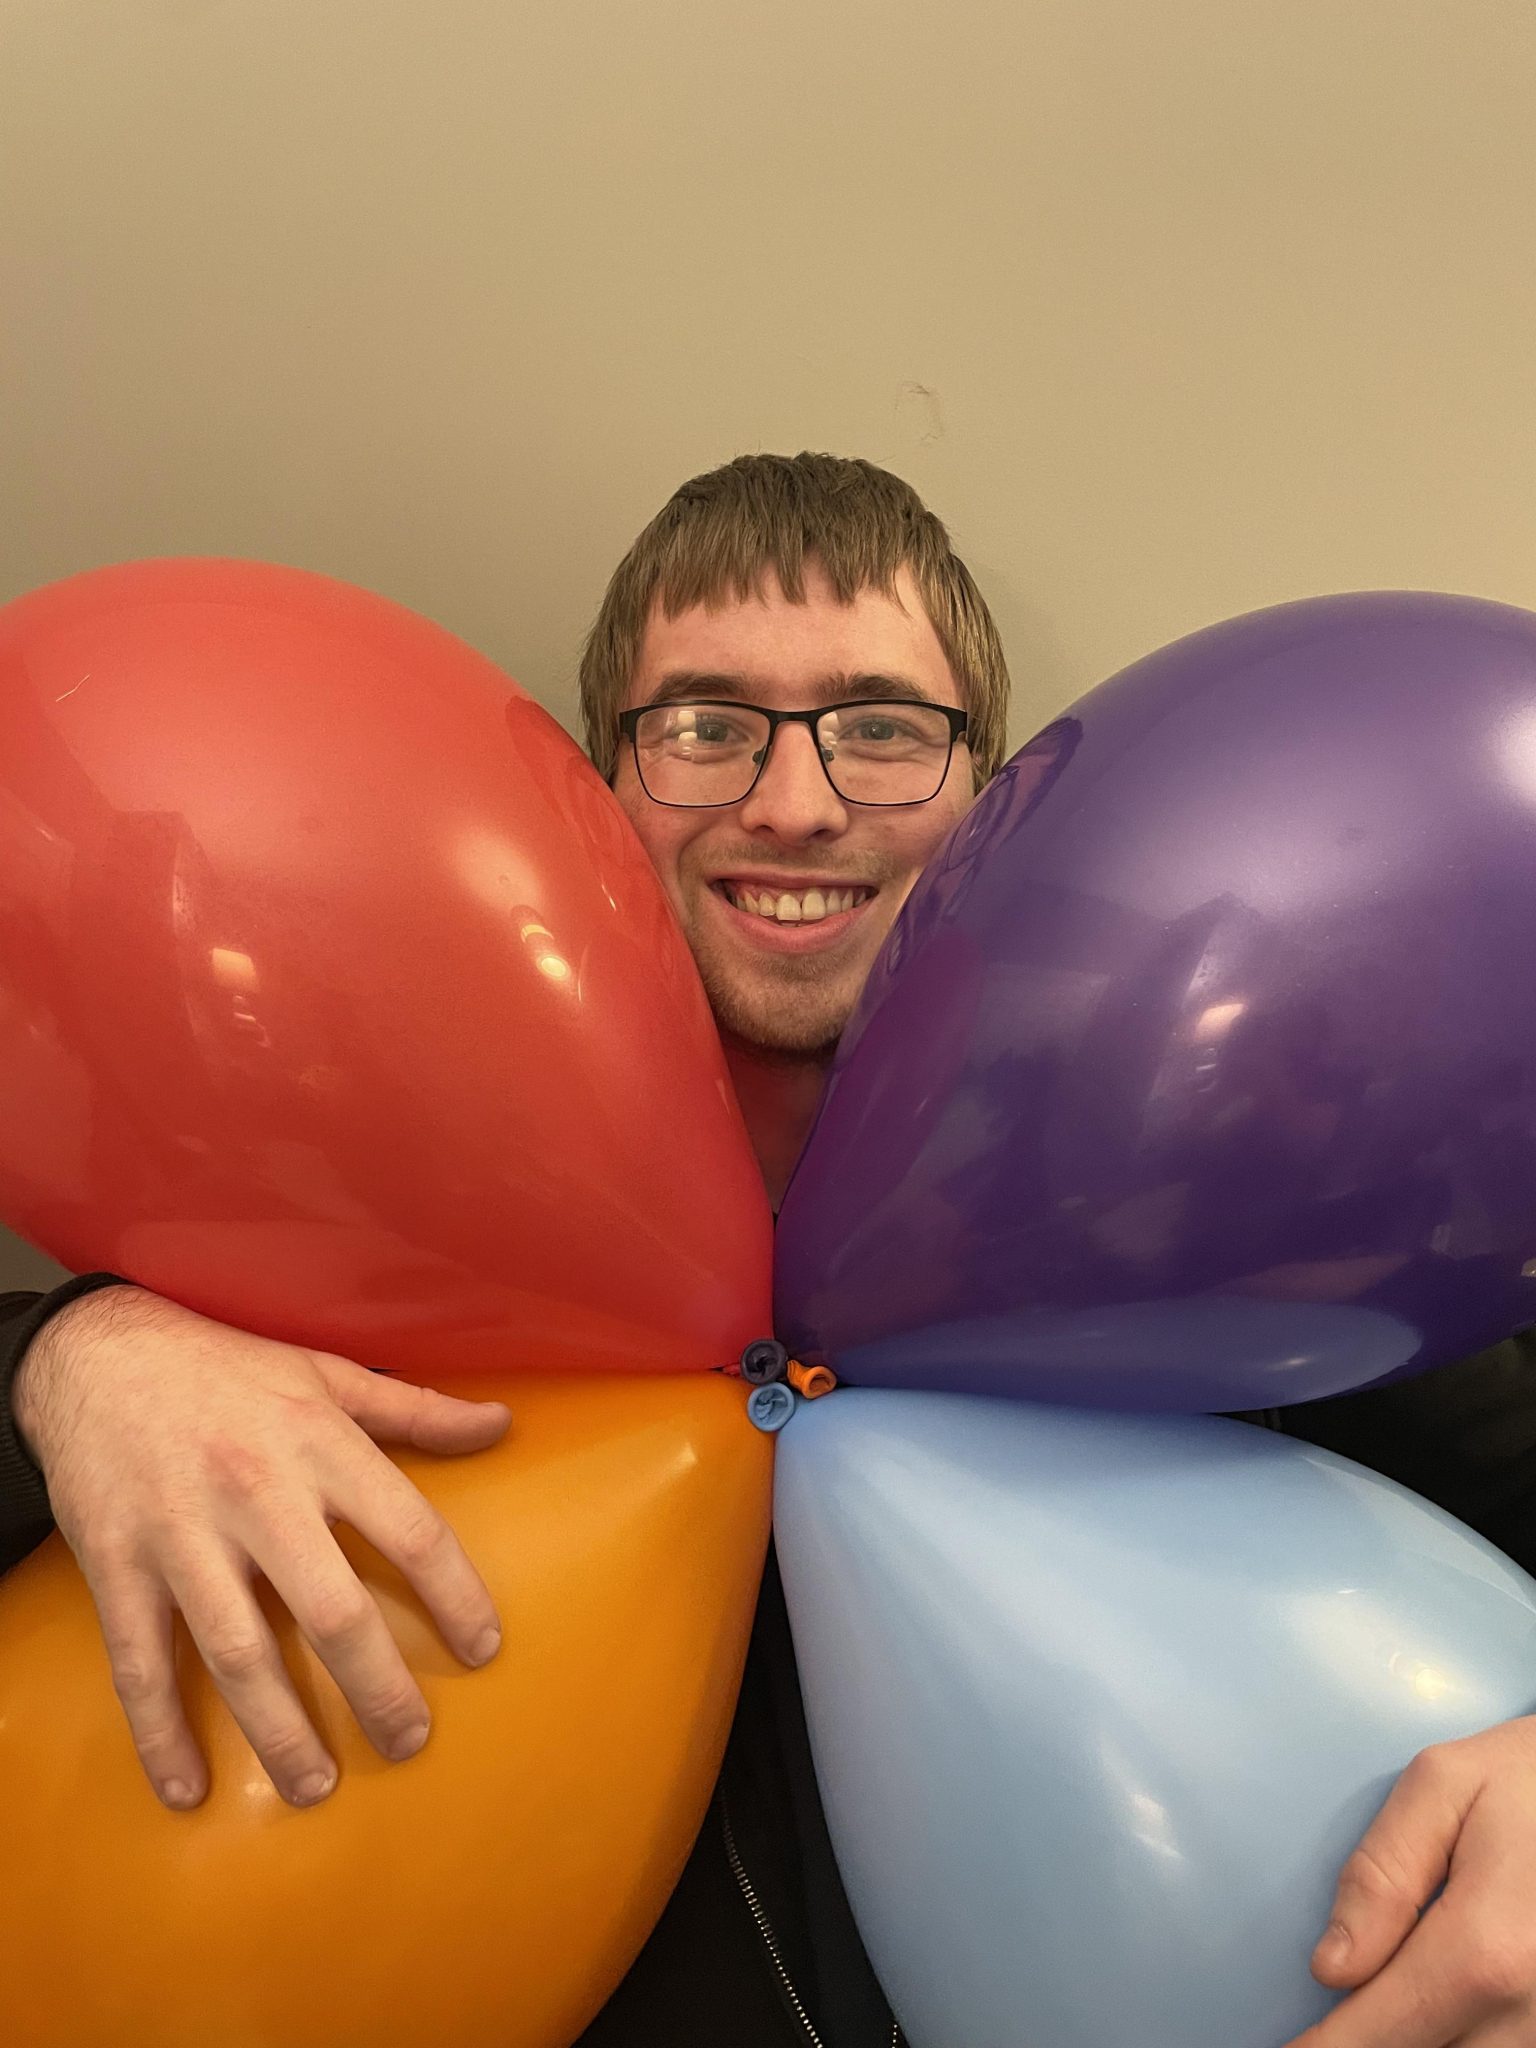 Killinghall man overcomes balloon phobia to launch new venture